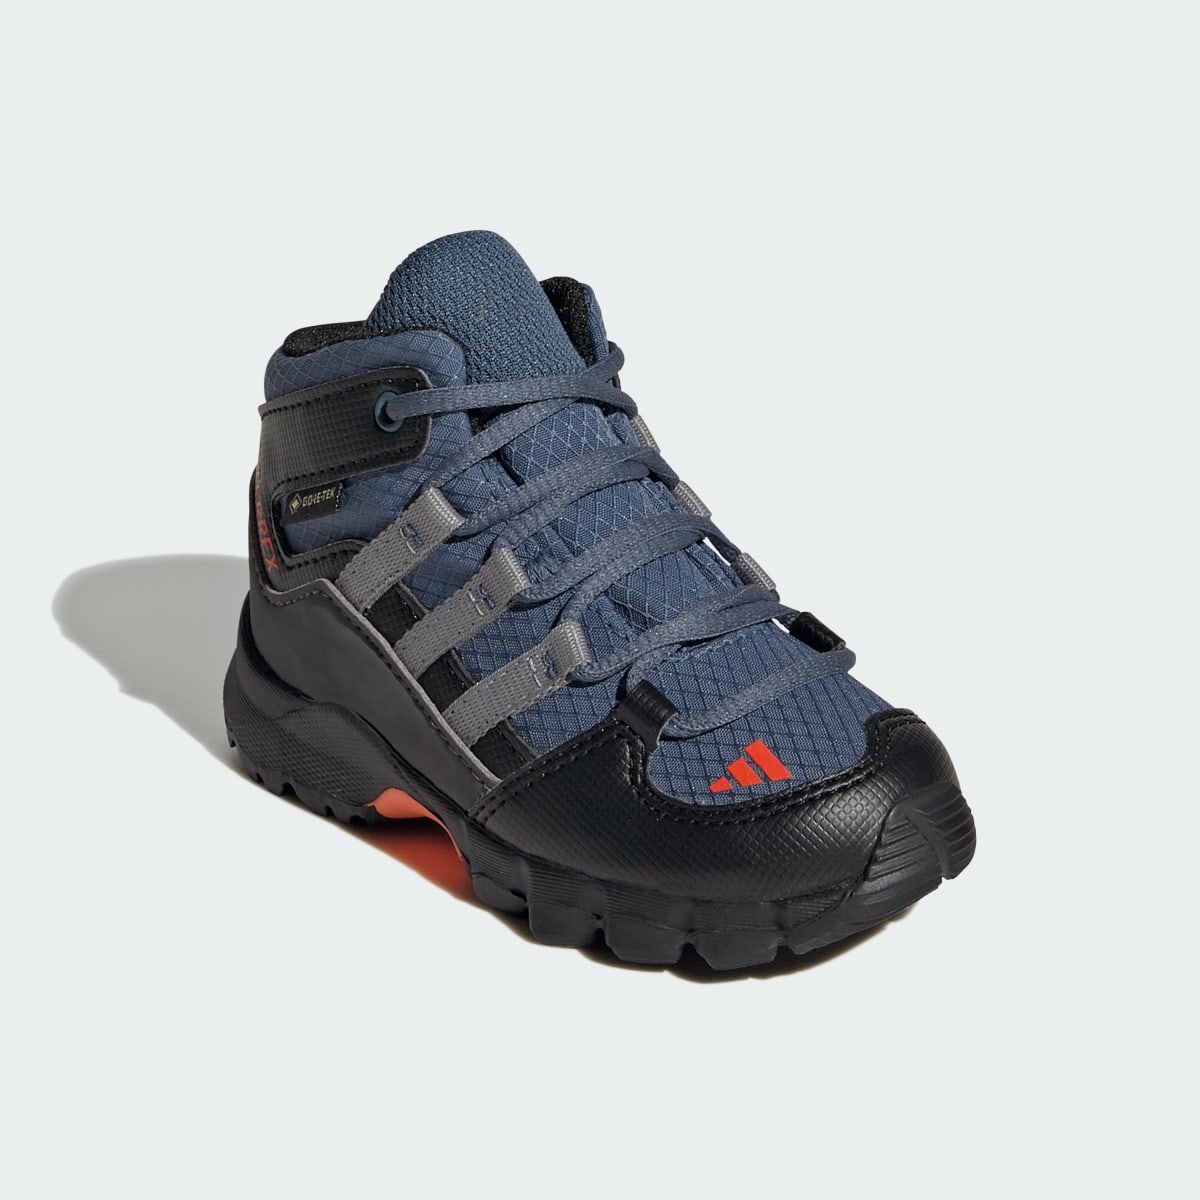 Adidas Terrex Mid GORE-TEX Hiking Shoes. 5